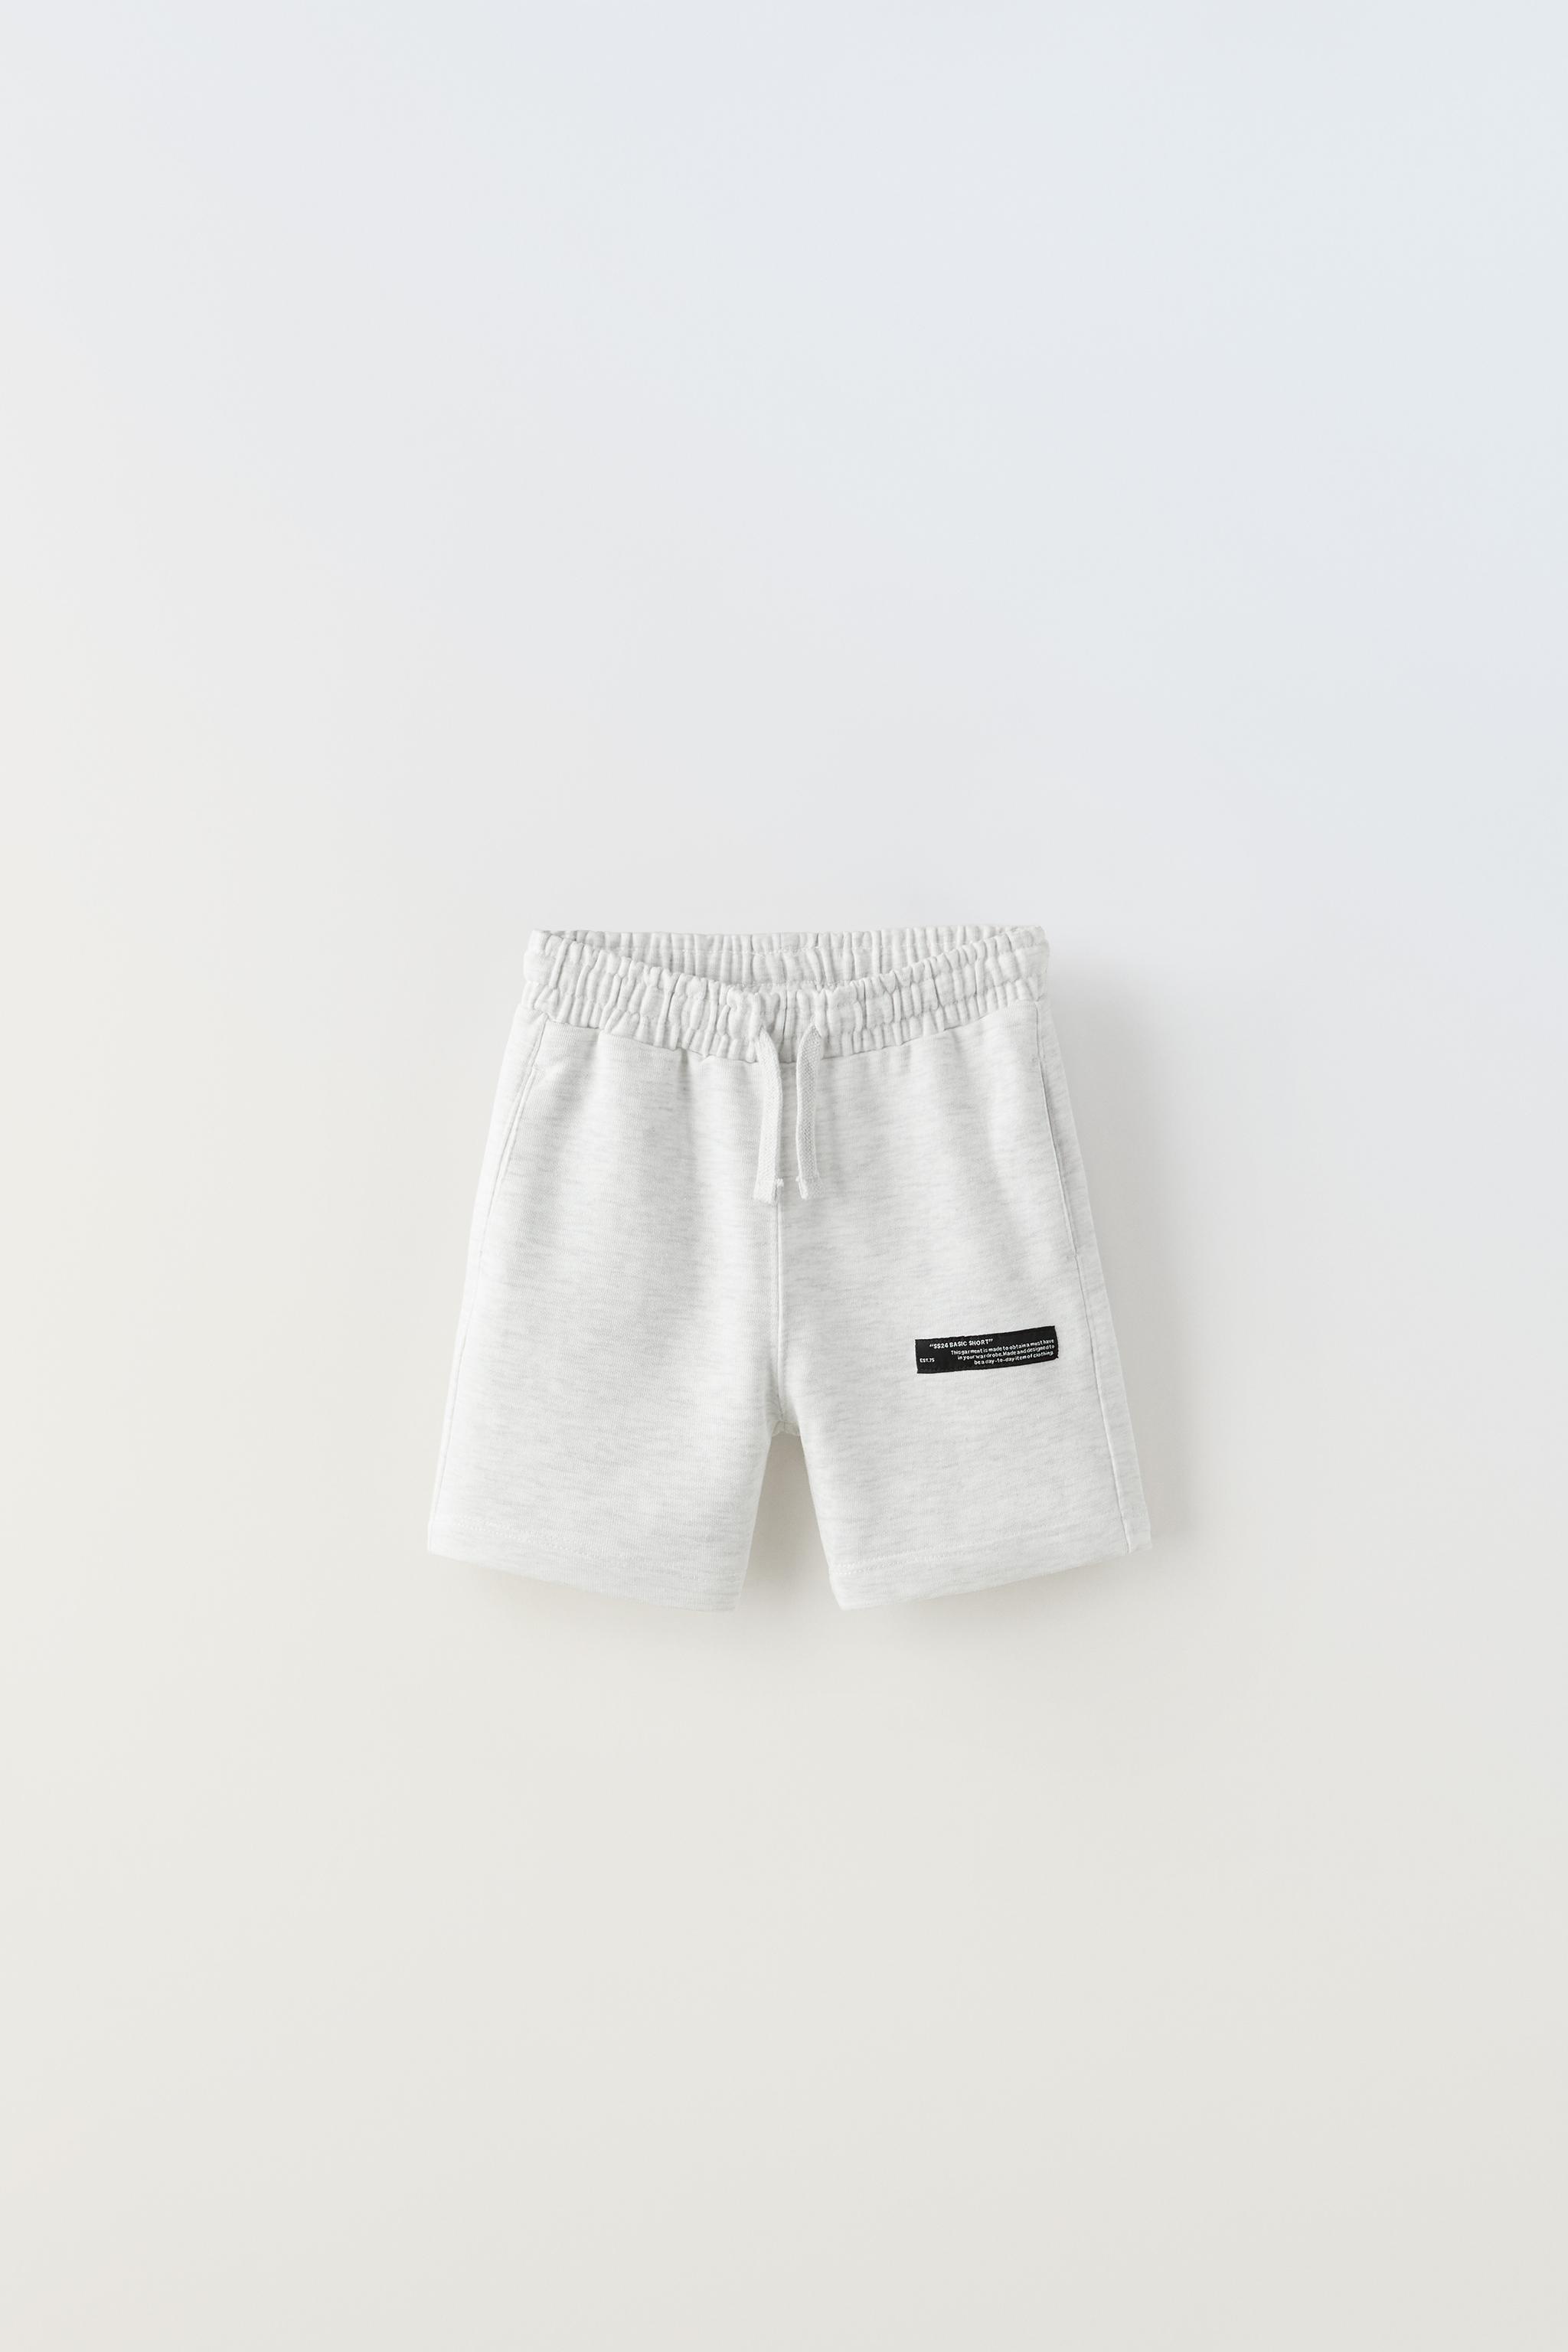 Zara, Shorts